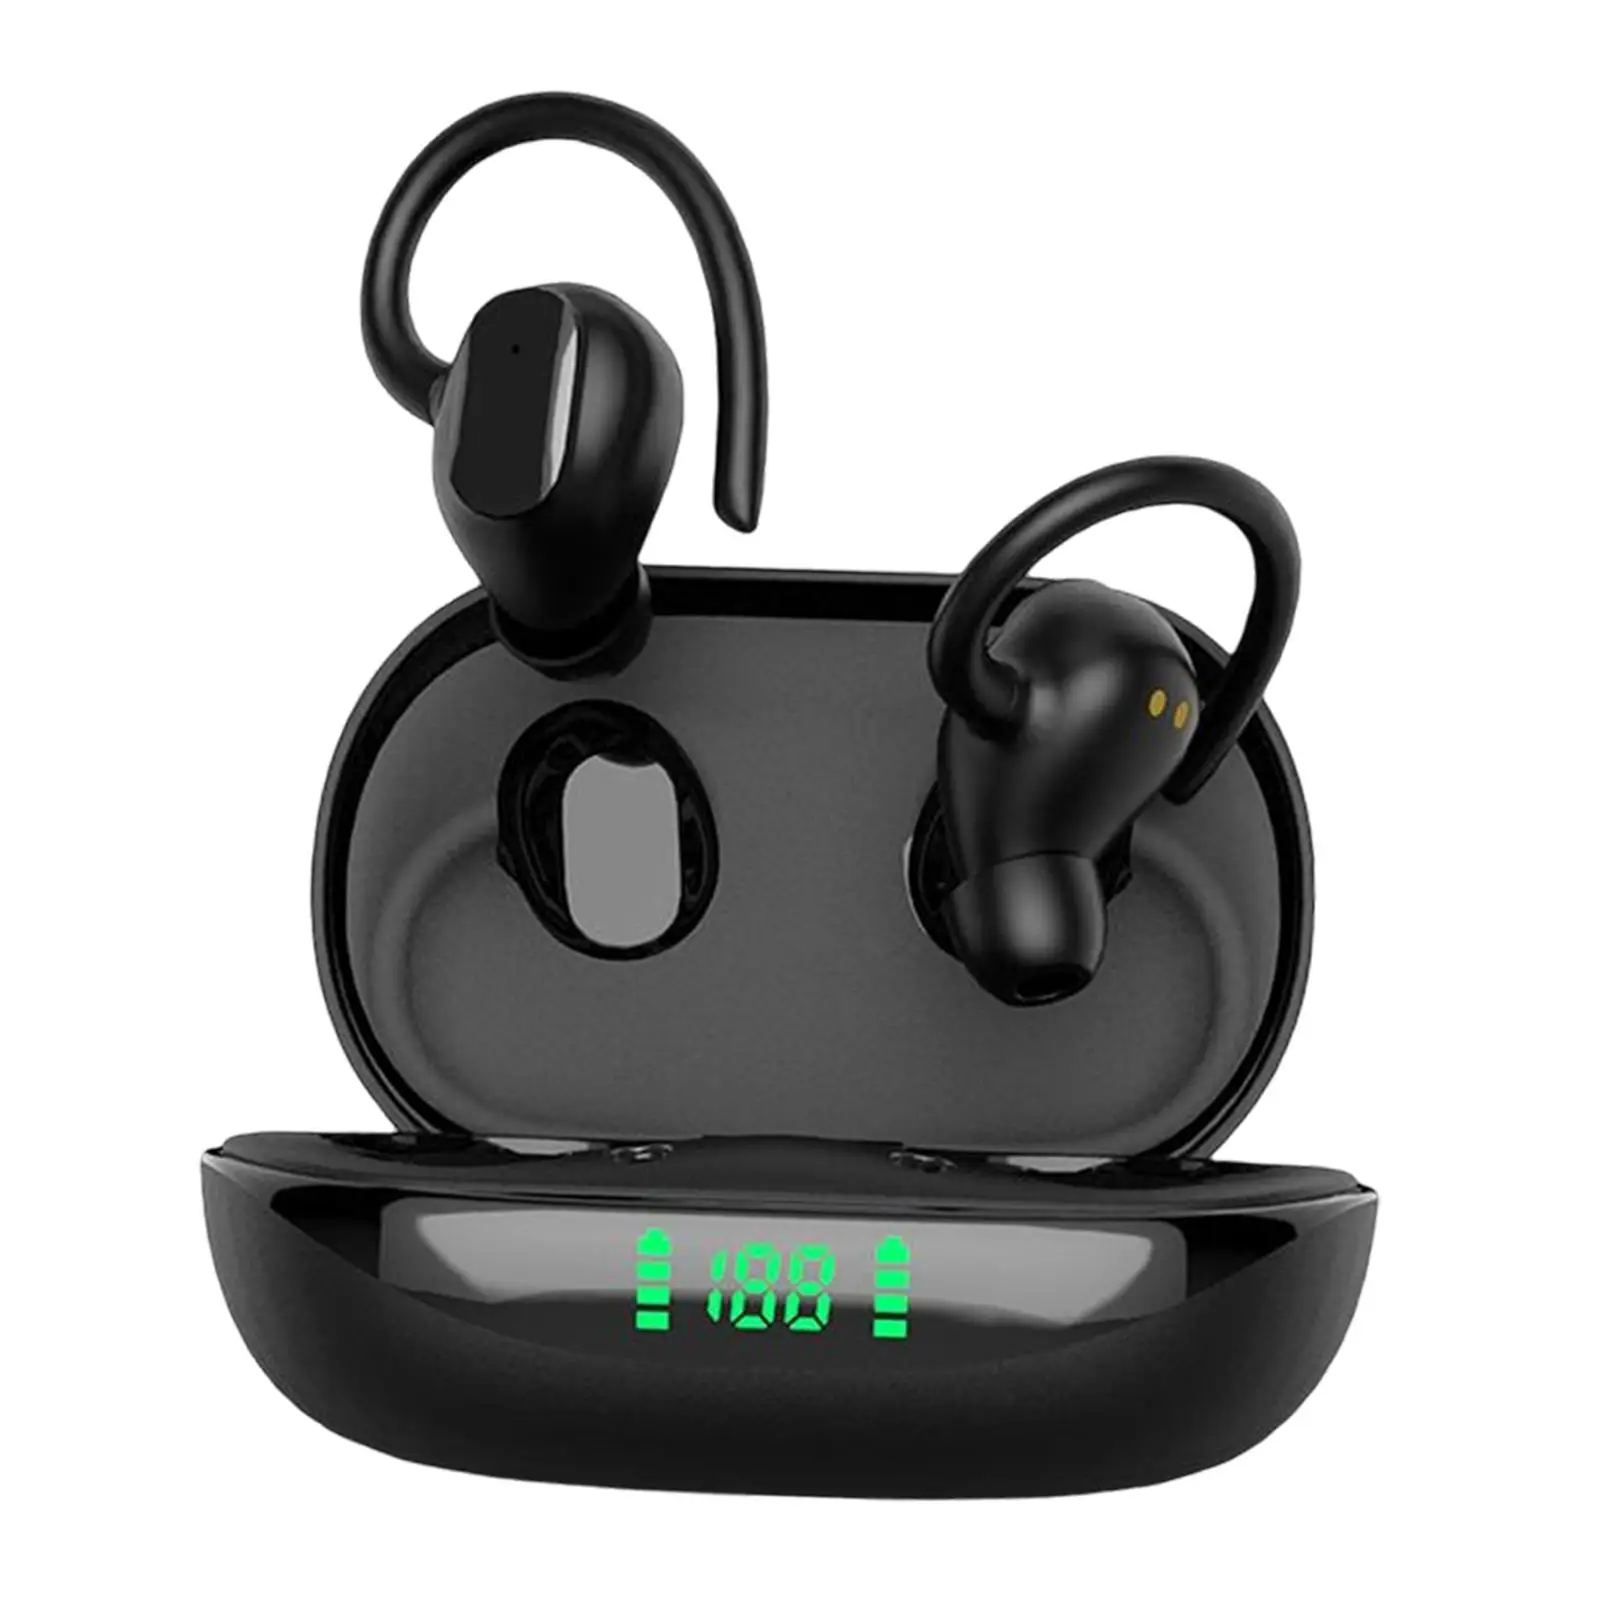 Waterproof Wireless Earphones Headphones with Earhooks for Workout Gaming Comfortable HiFi Sound Universal Power Display Music